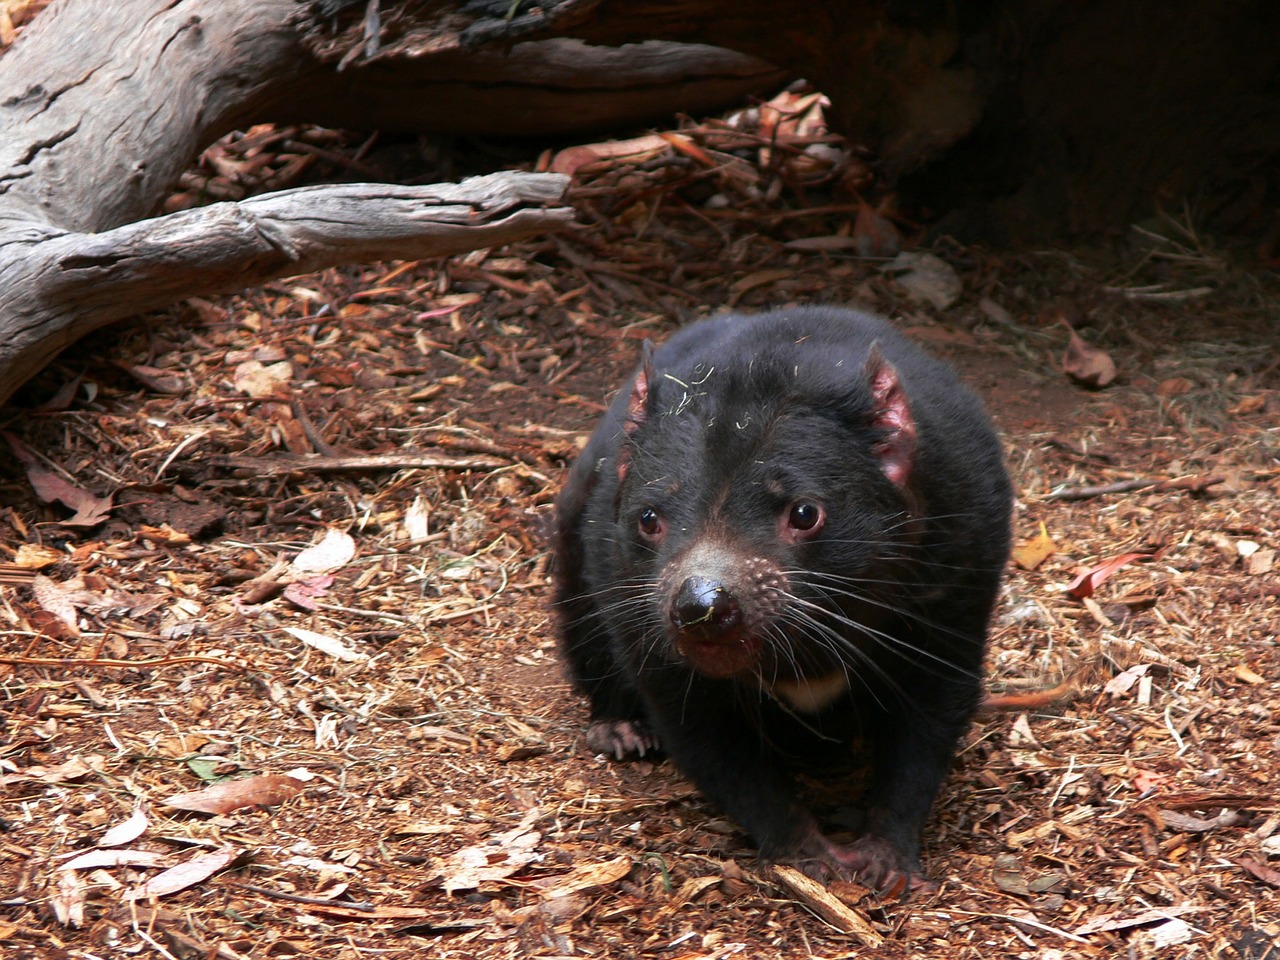 Tasmanian devil,baby tasmania devil, Marsupial rodents